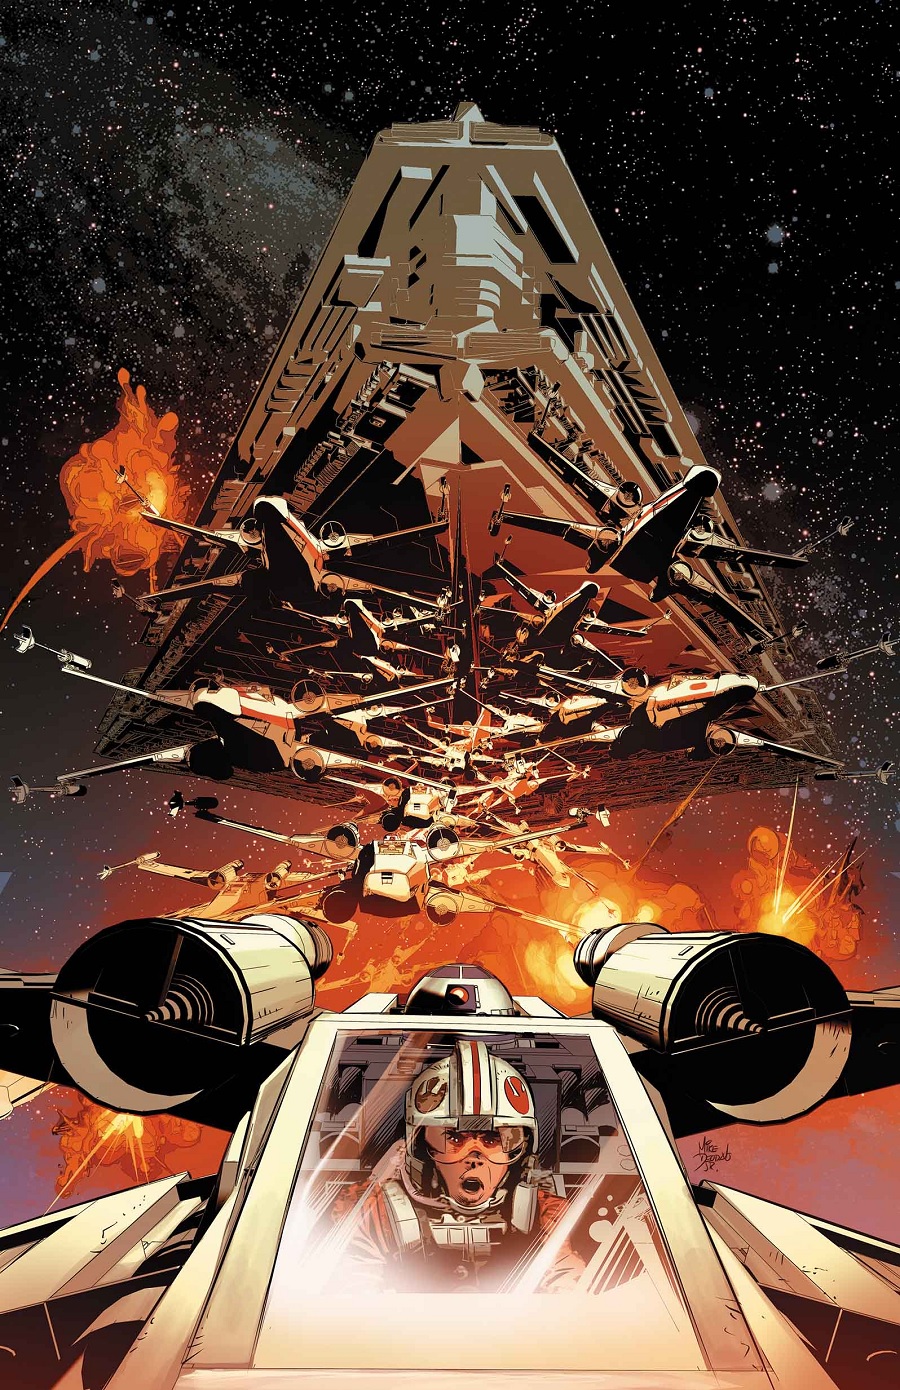 Star Wars Comics 11 - Couverture B